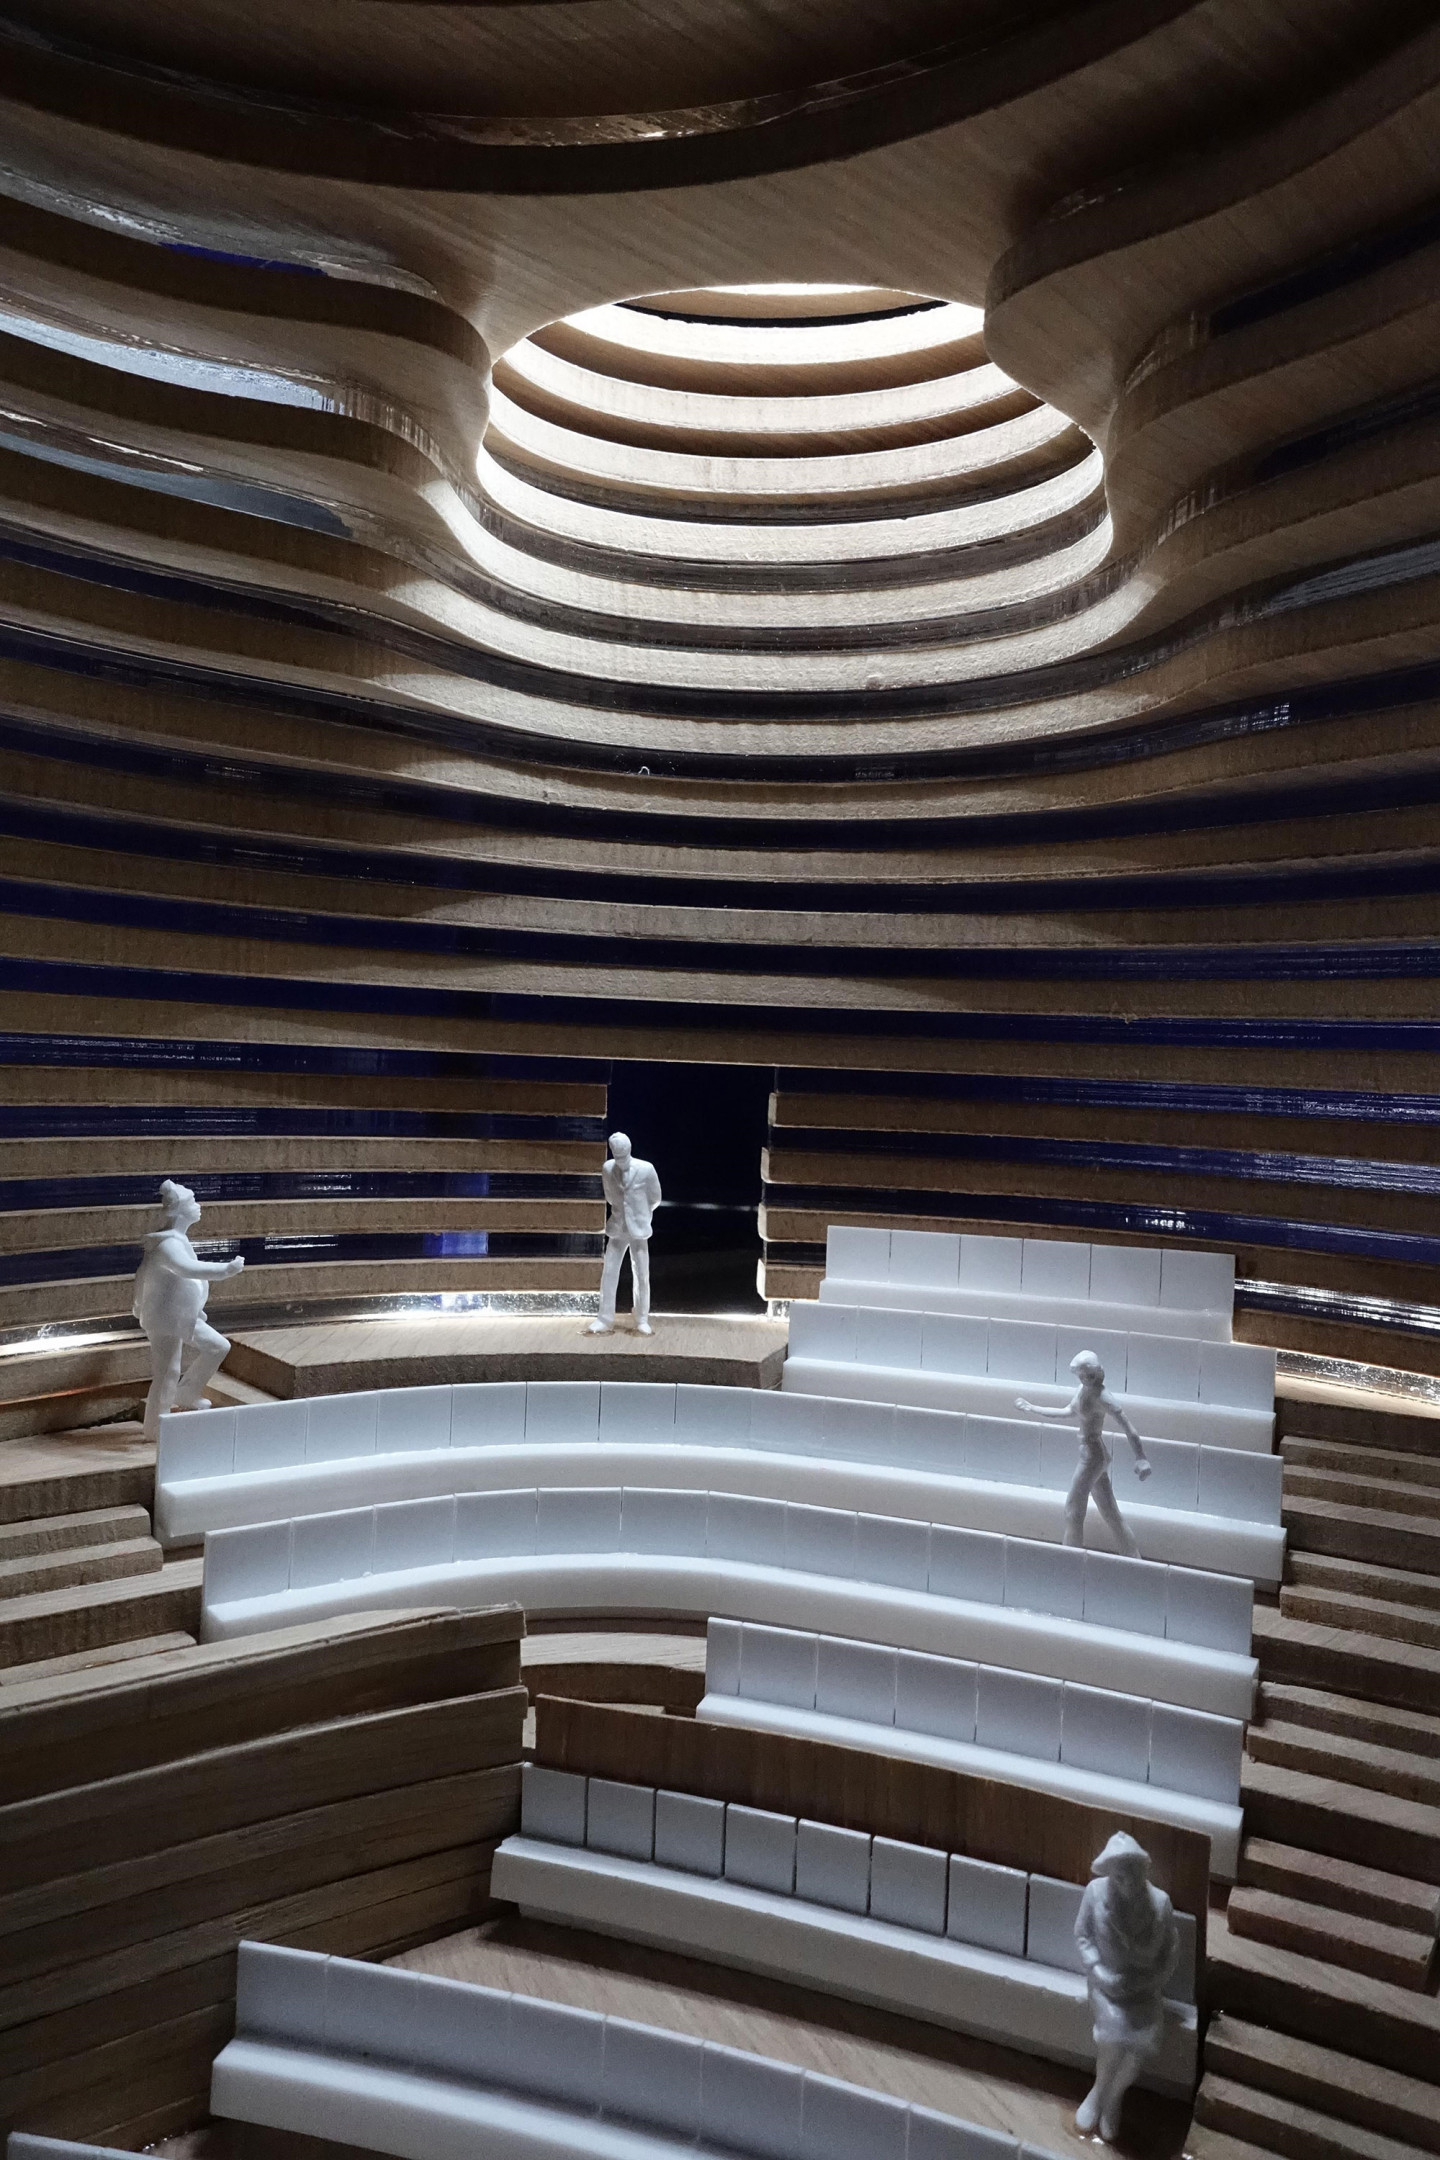 El Gouna Concert Hall by Studio Seilern, made from lasercut Plexiglass and timber veneer.